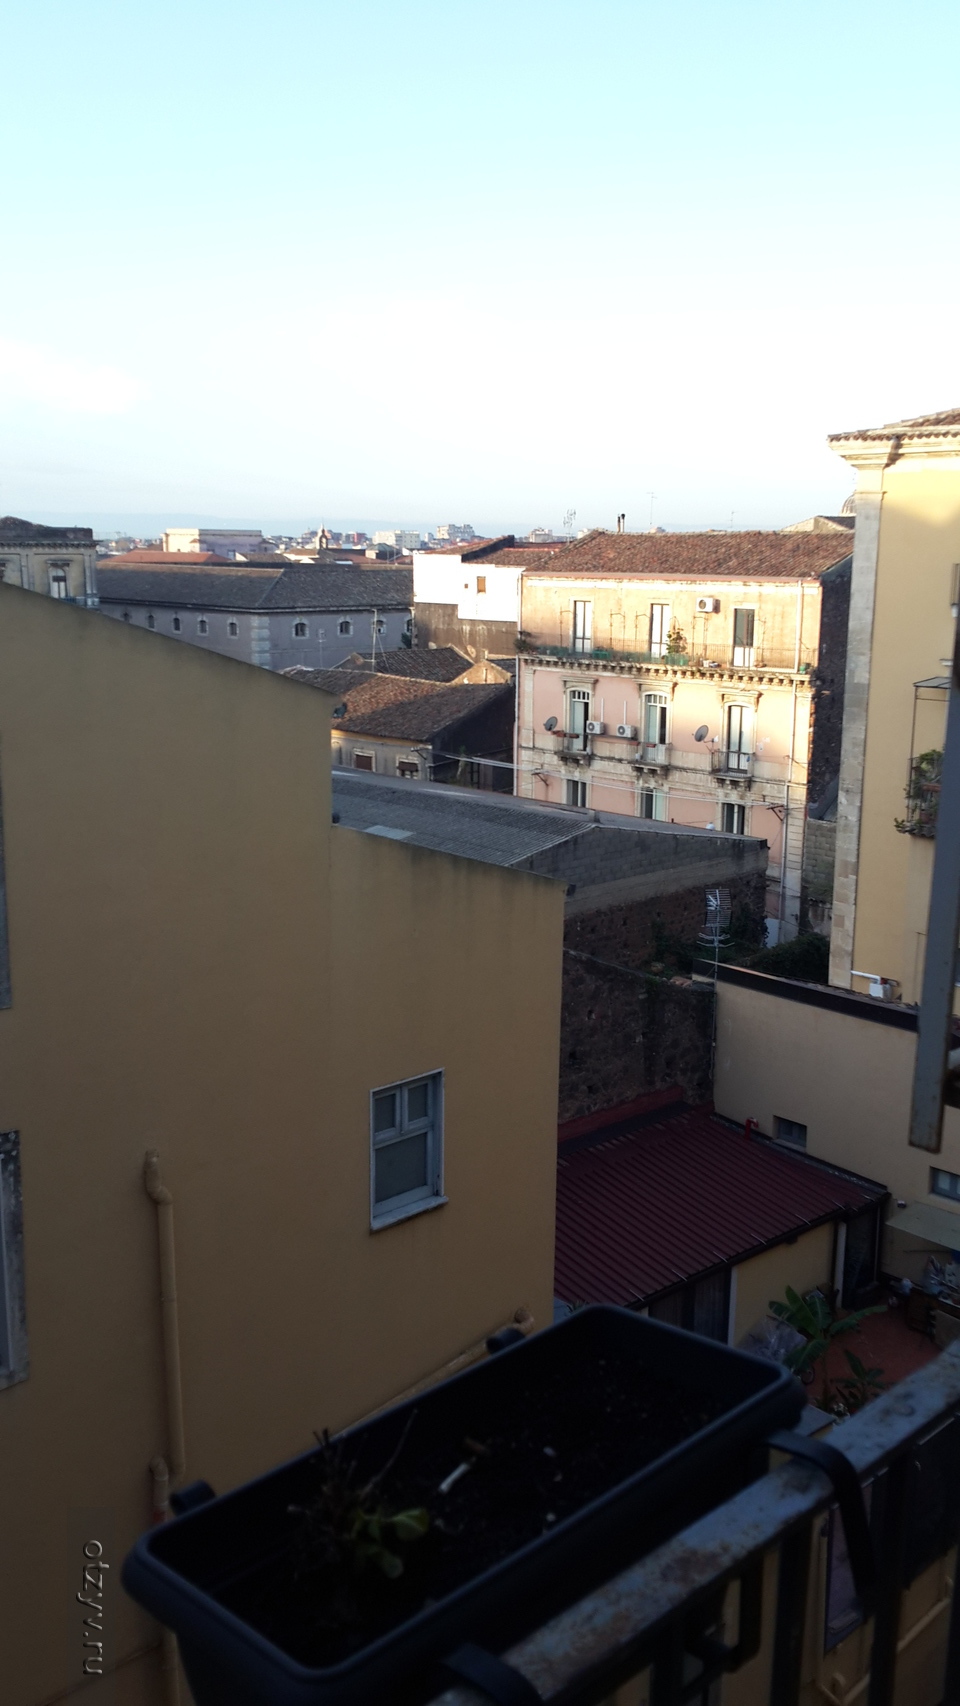 CCLY Hostel Catania